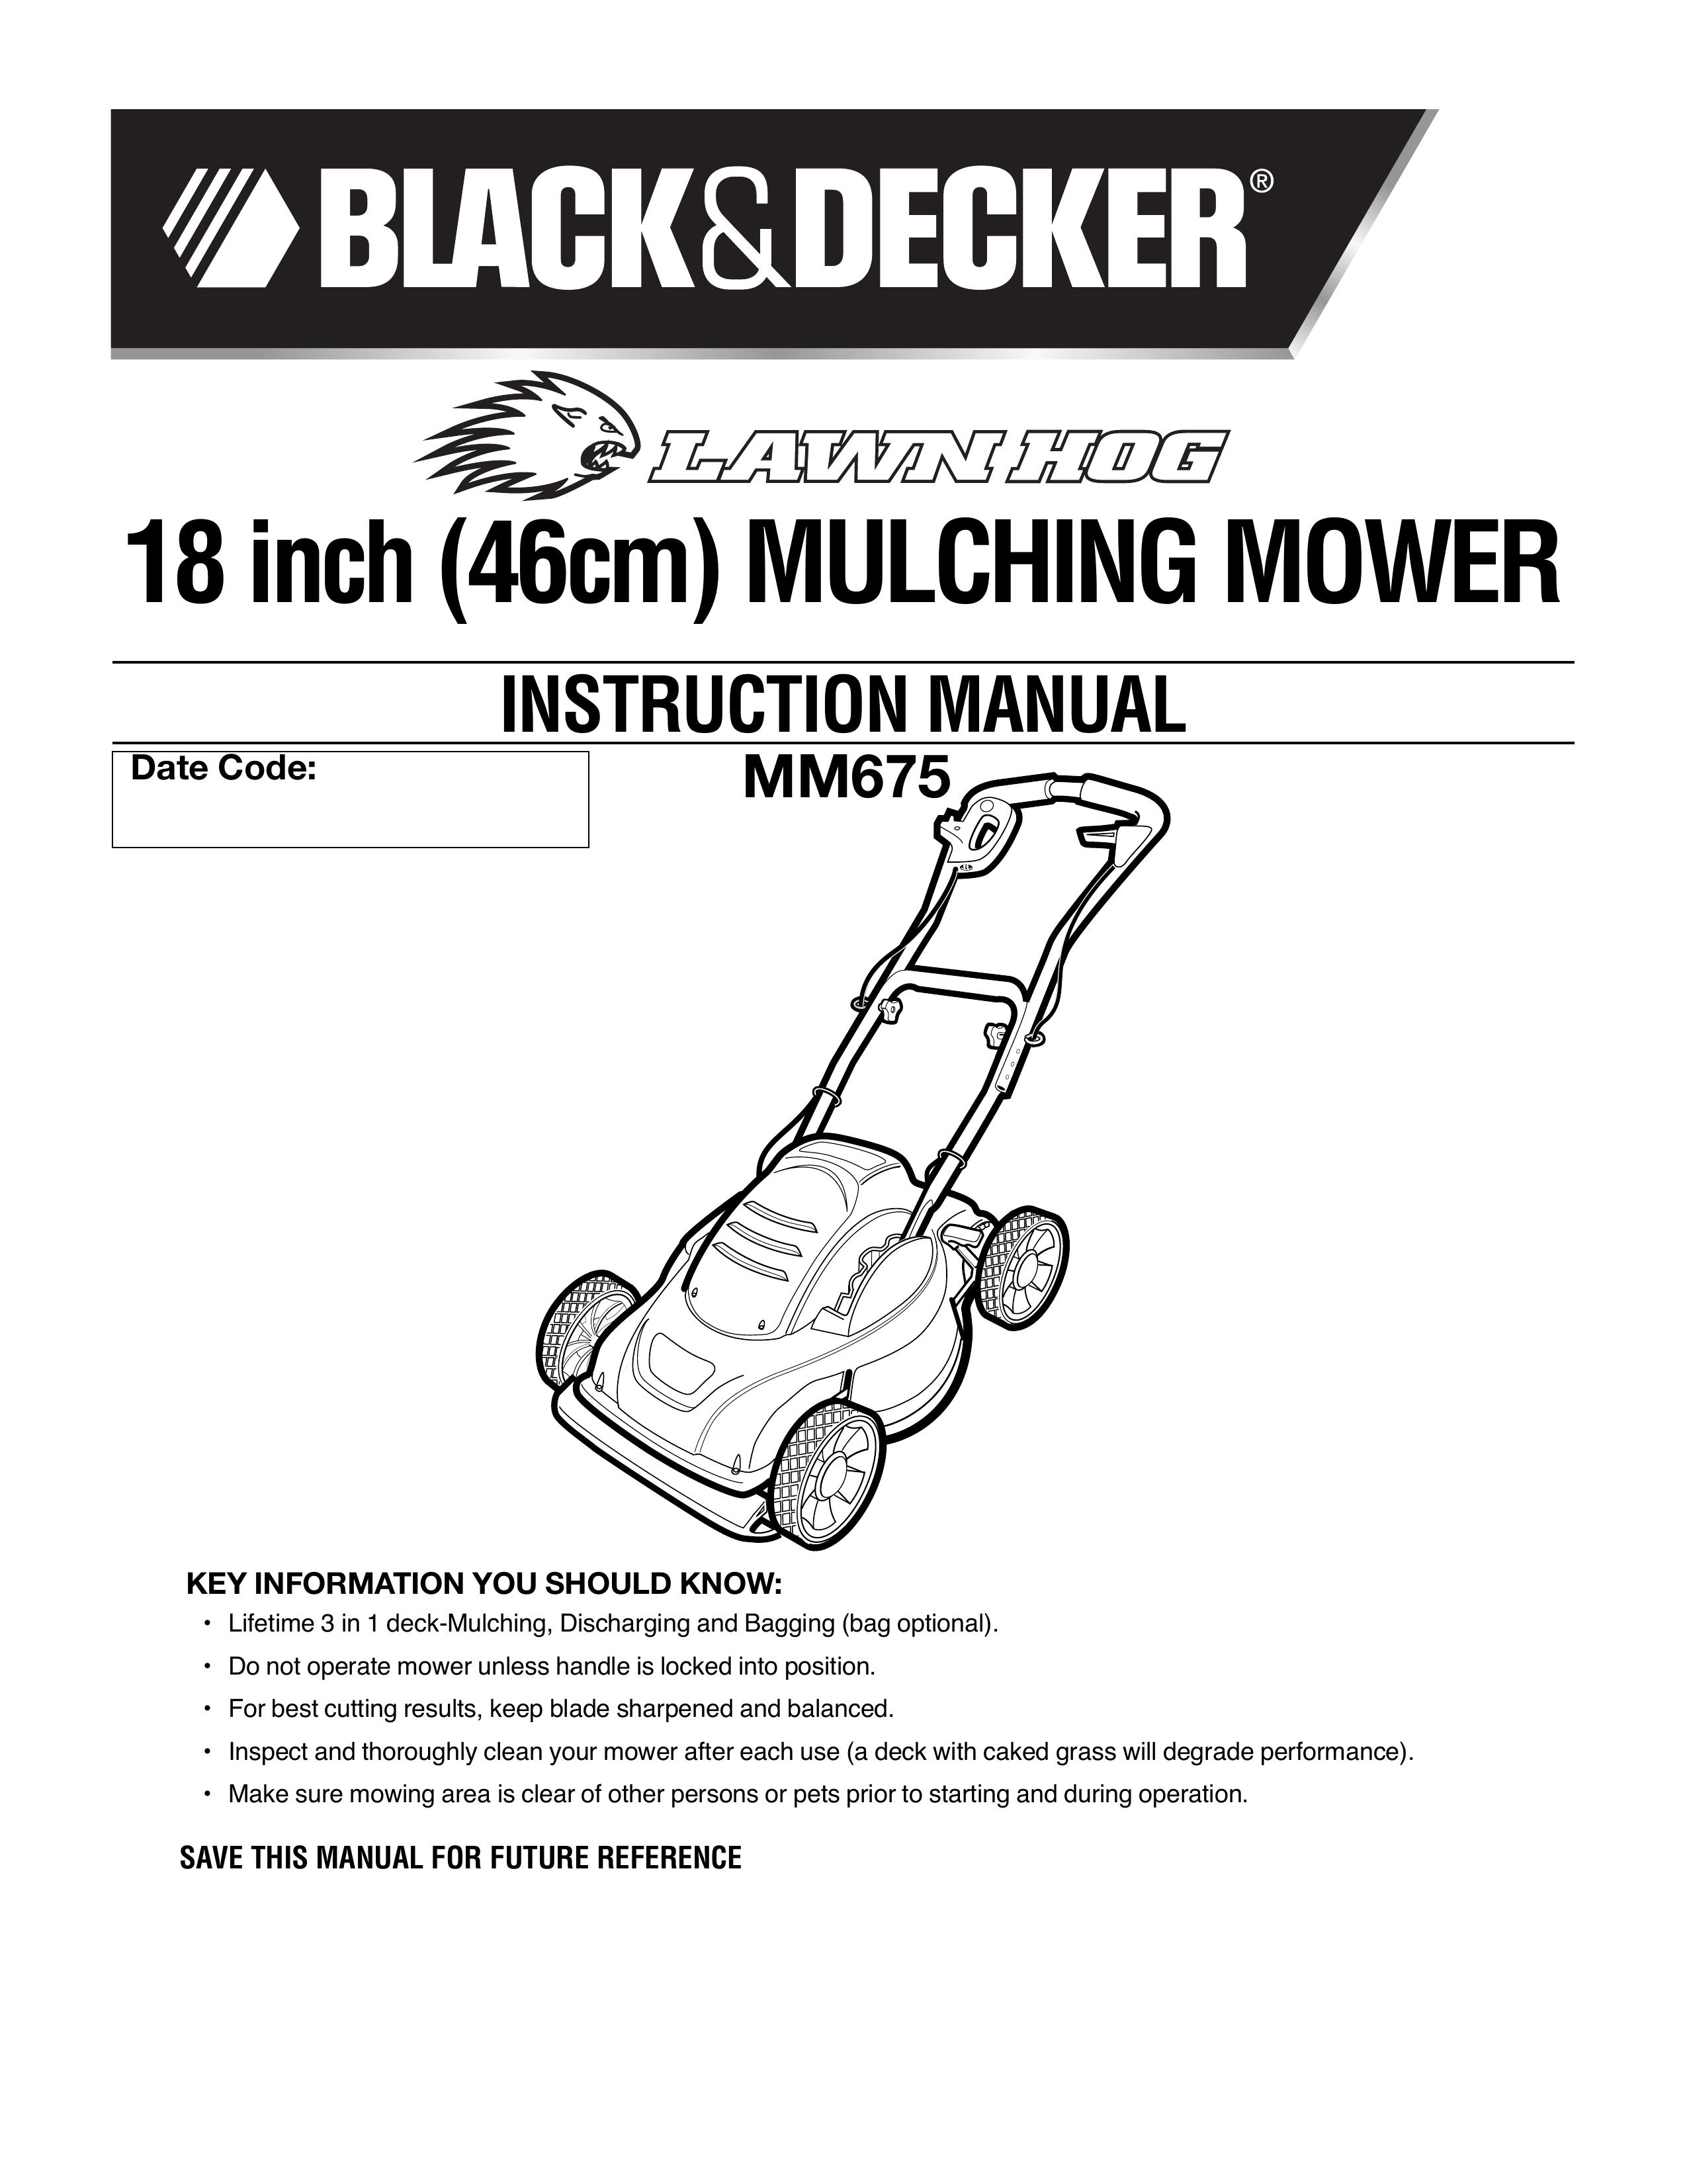 Black & Decker MM675 Lawn Mower User Manual